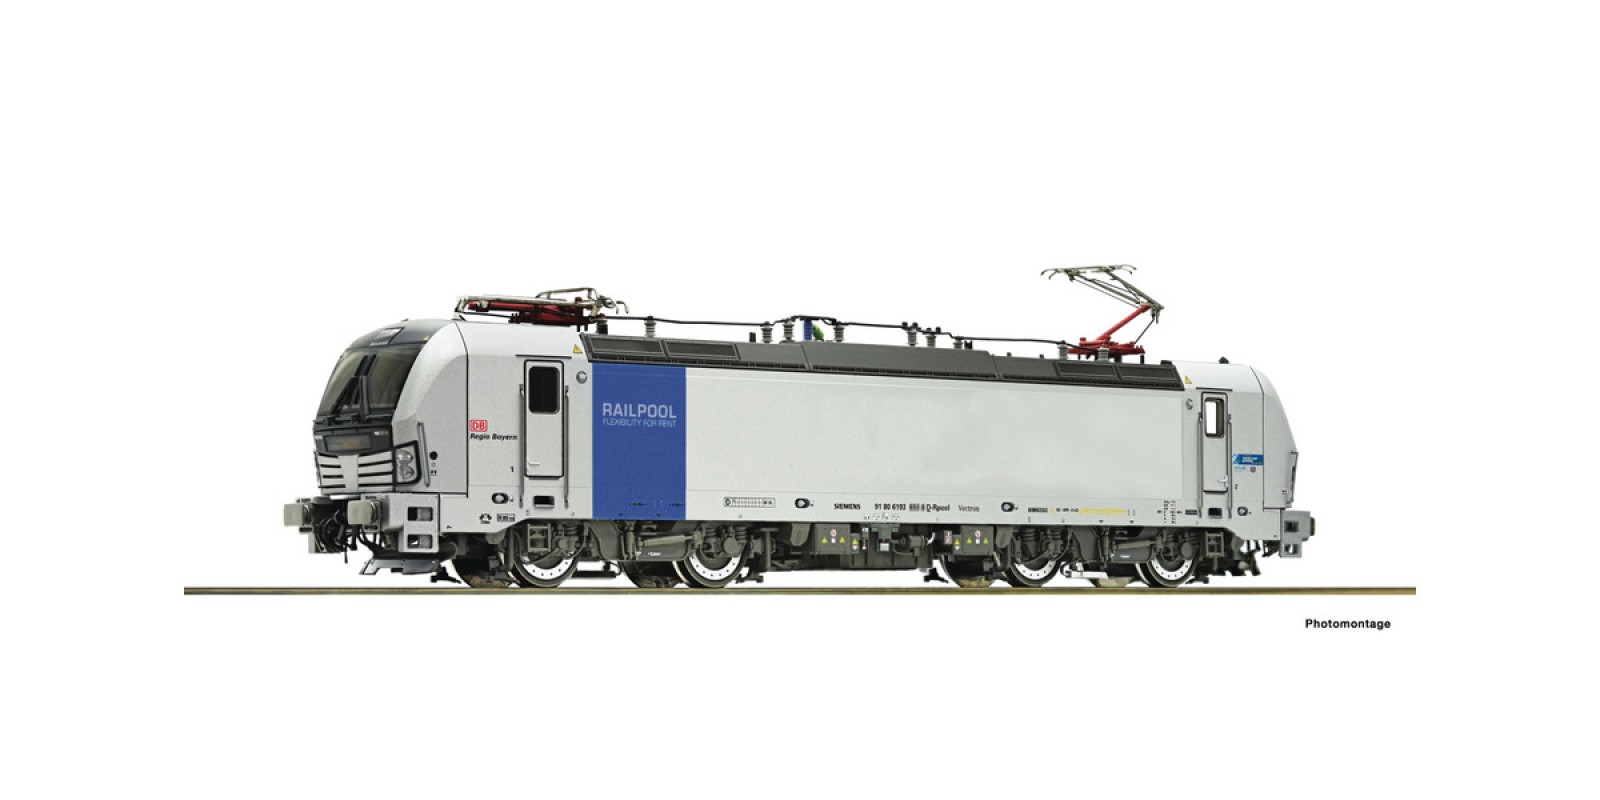 RO73933 - Electric locomotive 193 805, Railpool